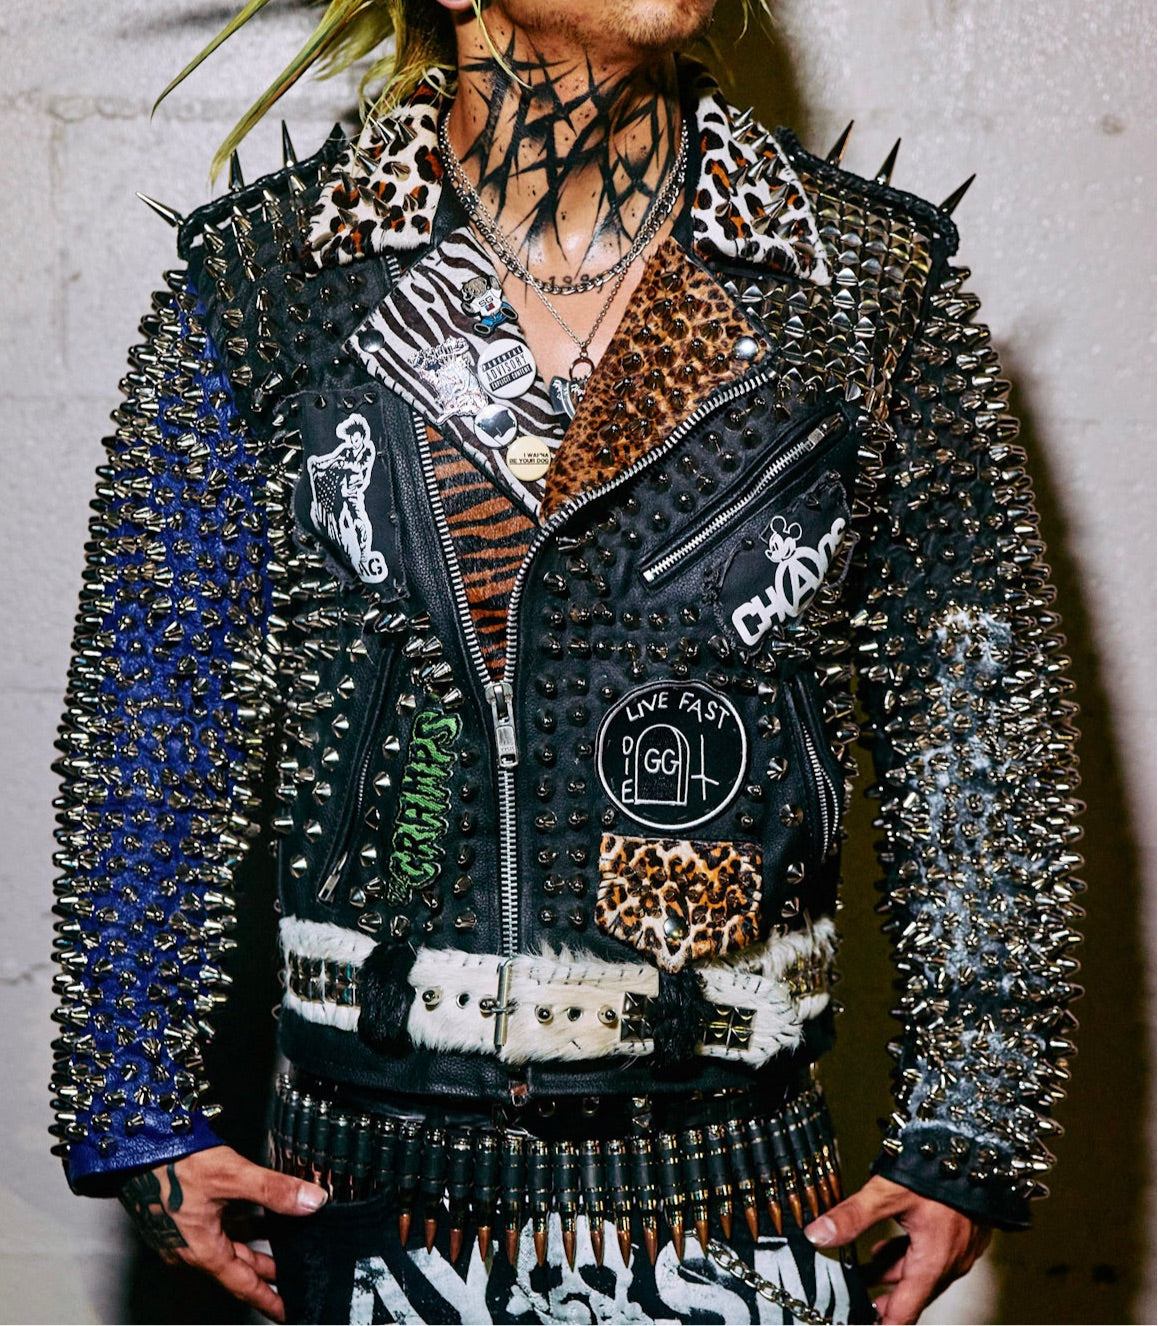 Men Rock Punk Style Black Leather Jacket with Studs, Studded Leather Jacket  | eBay